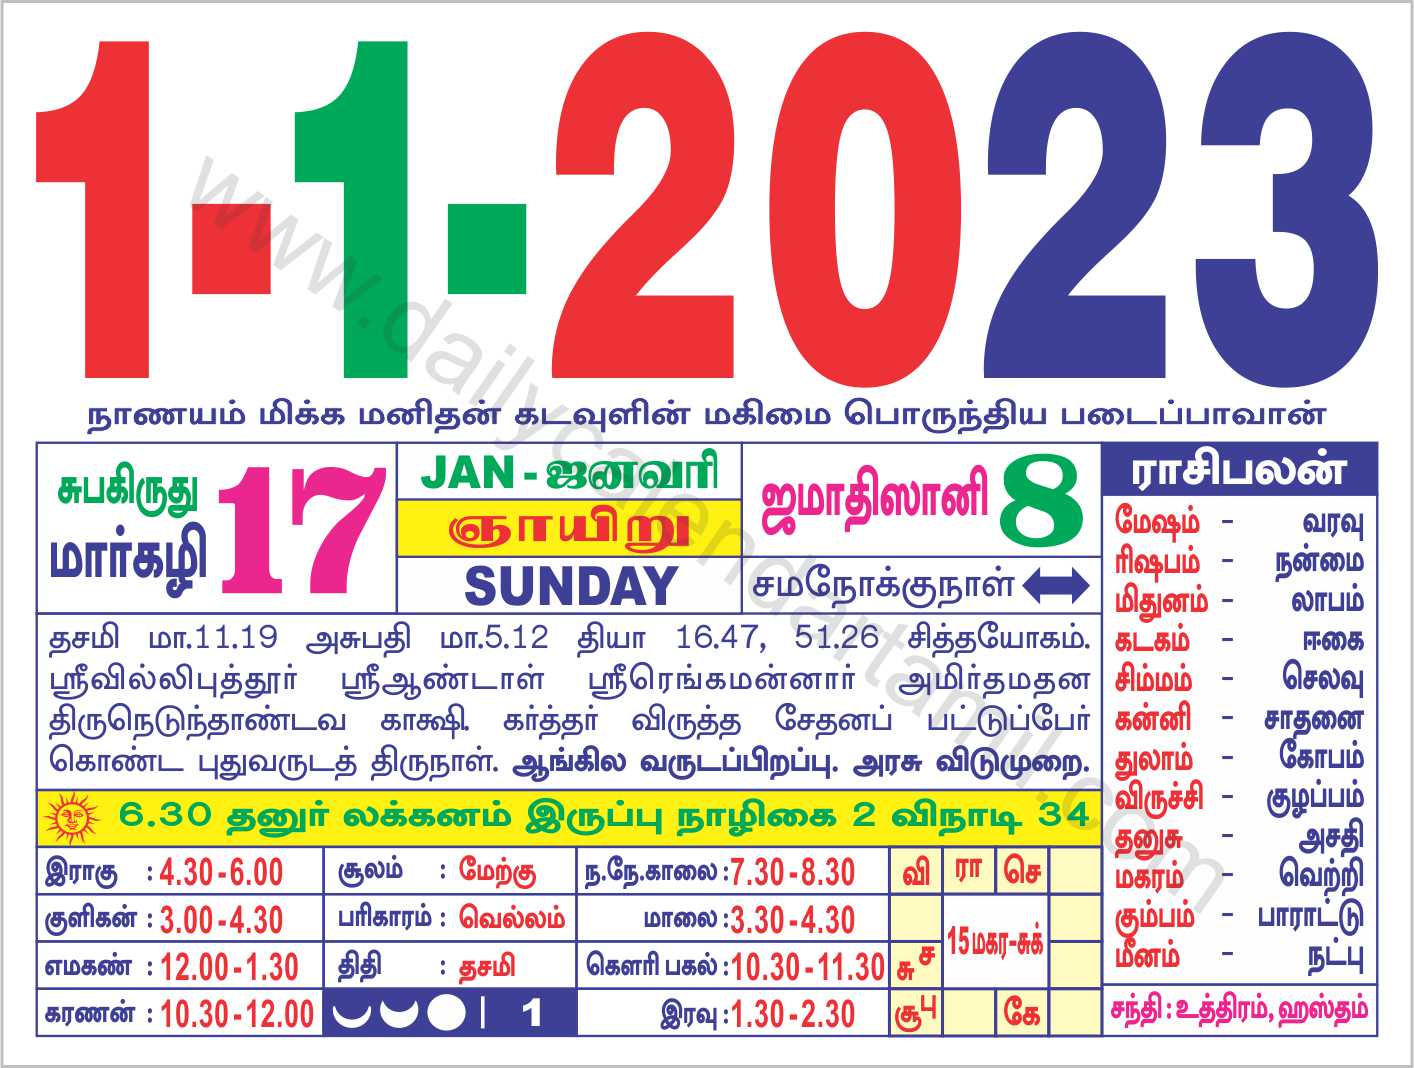 tamil-calendar-january-2023-2023